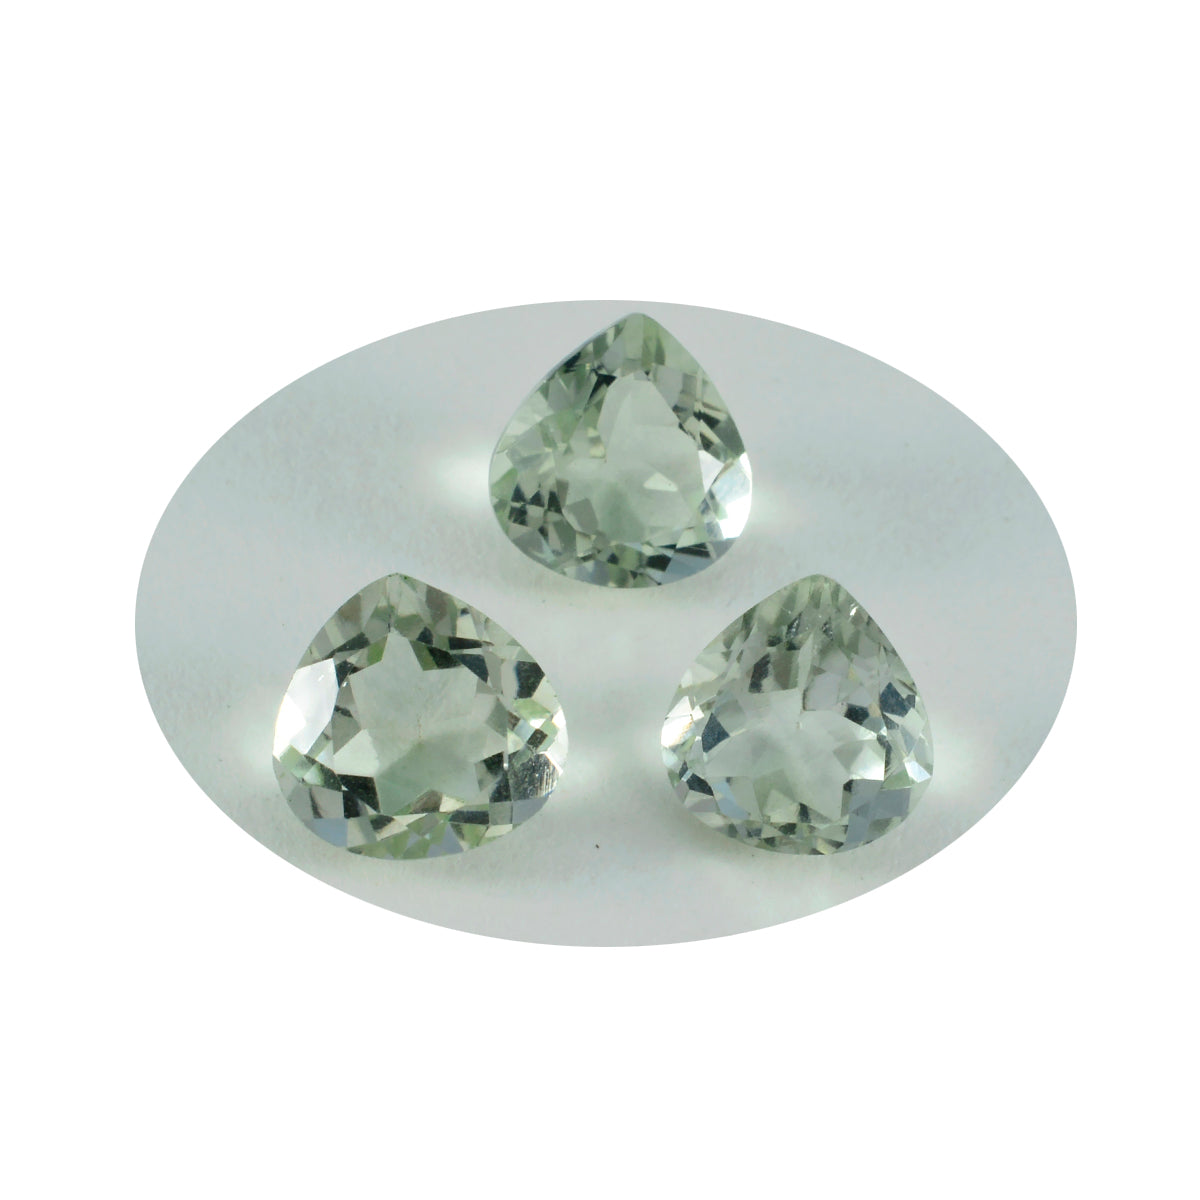 Riyogems 1PC Green Amethyst Faceted 8x8 mm Heart Shape A+ Quality Loose Gemstone